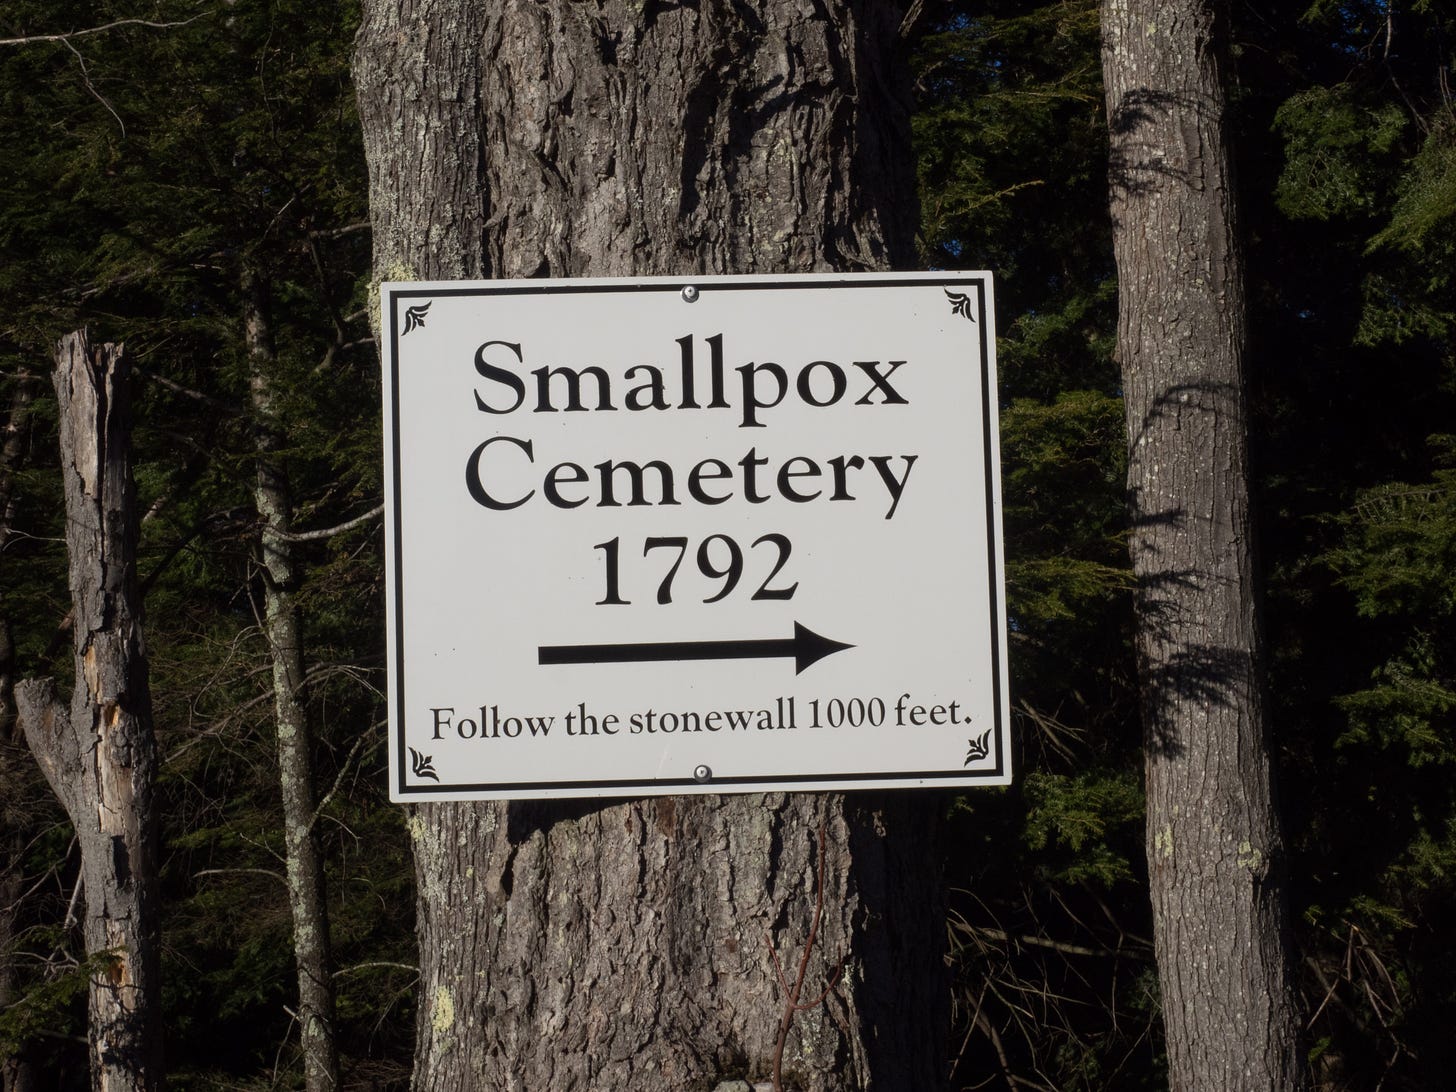 Smallpox cemetery sign